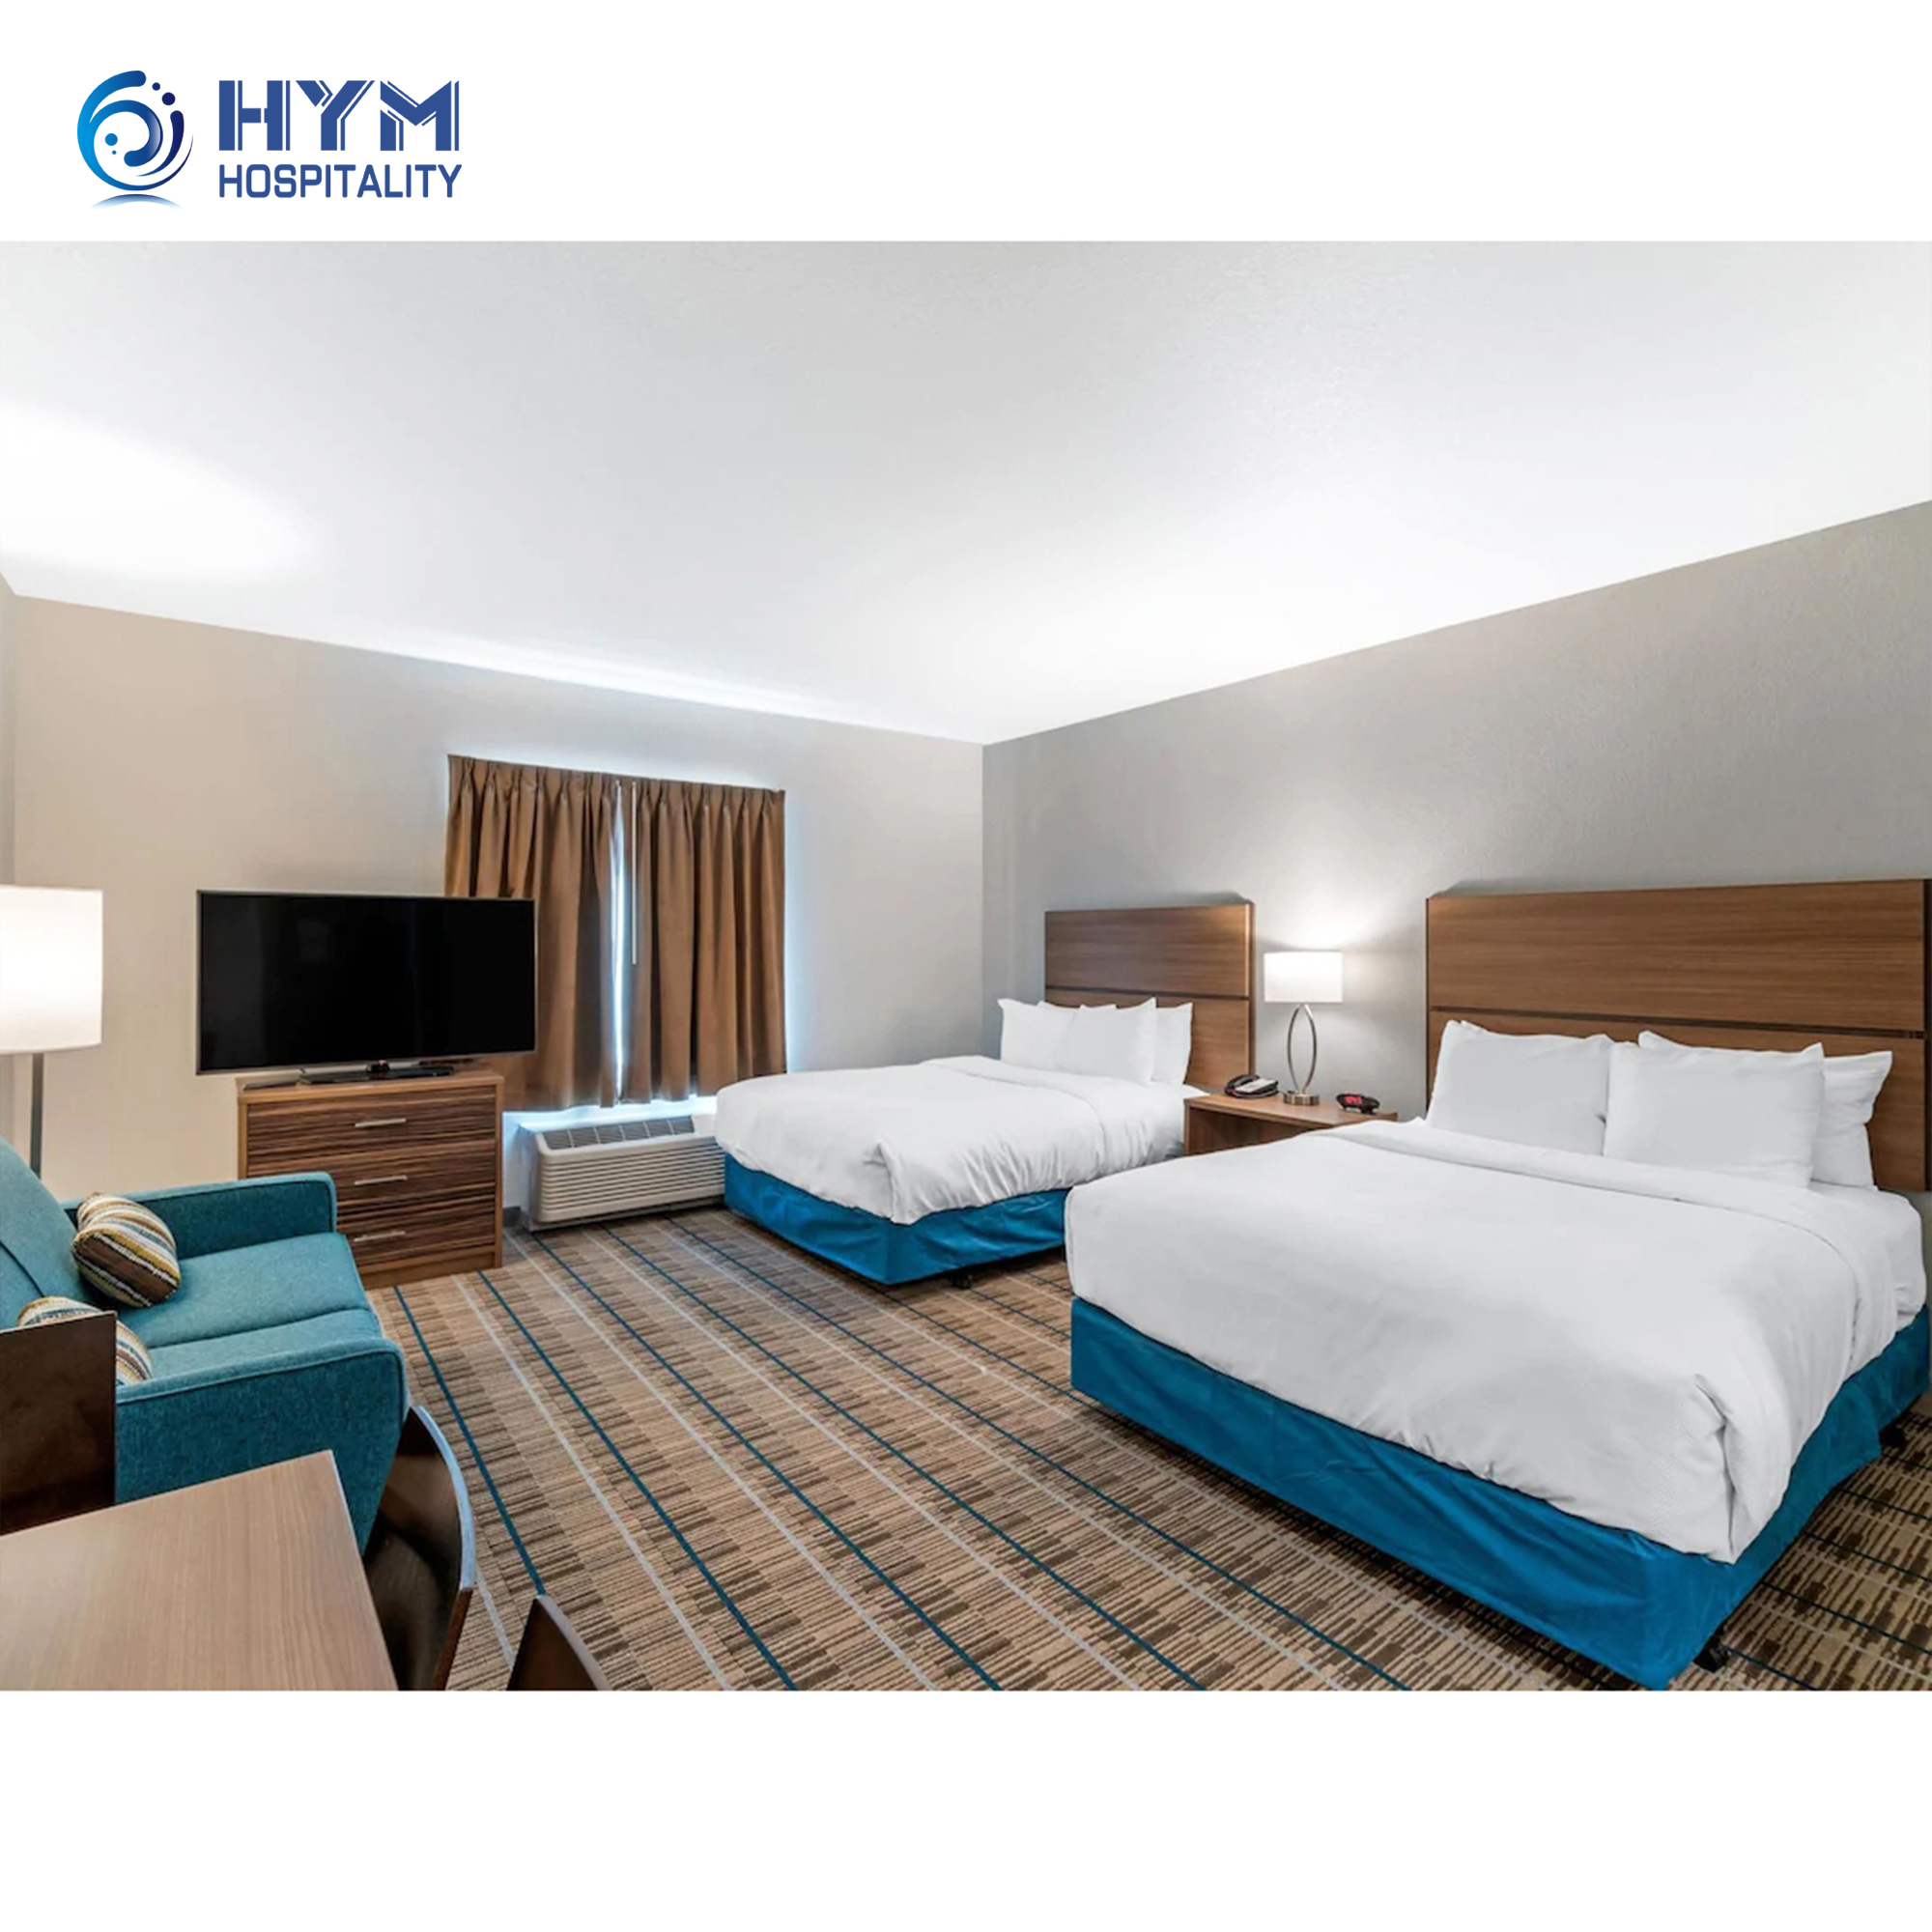 MainStay Suites Economical 2 Star Hotel Bedroom Furniture